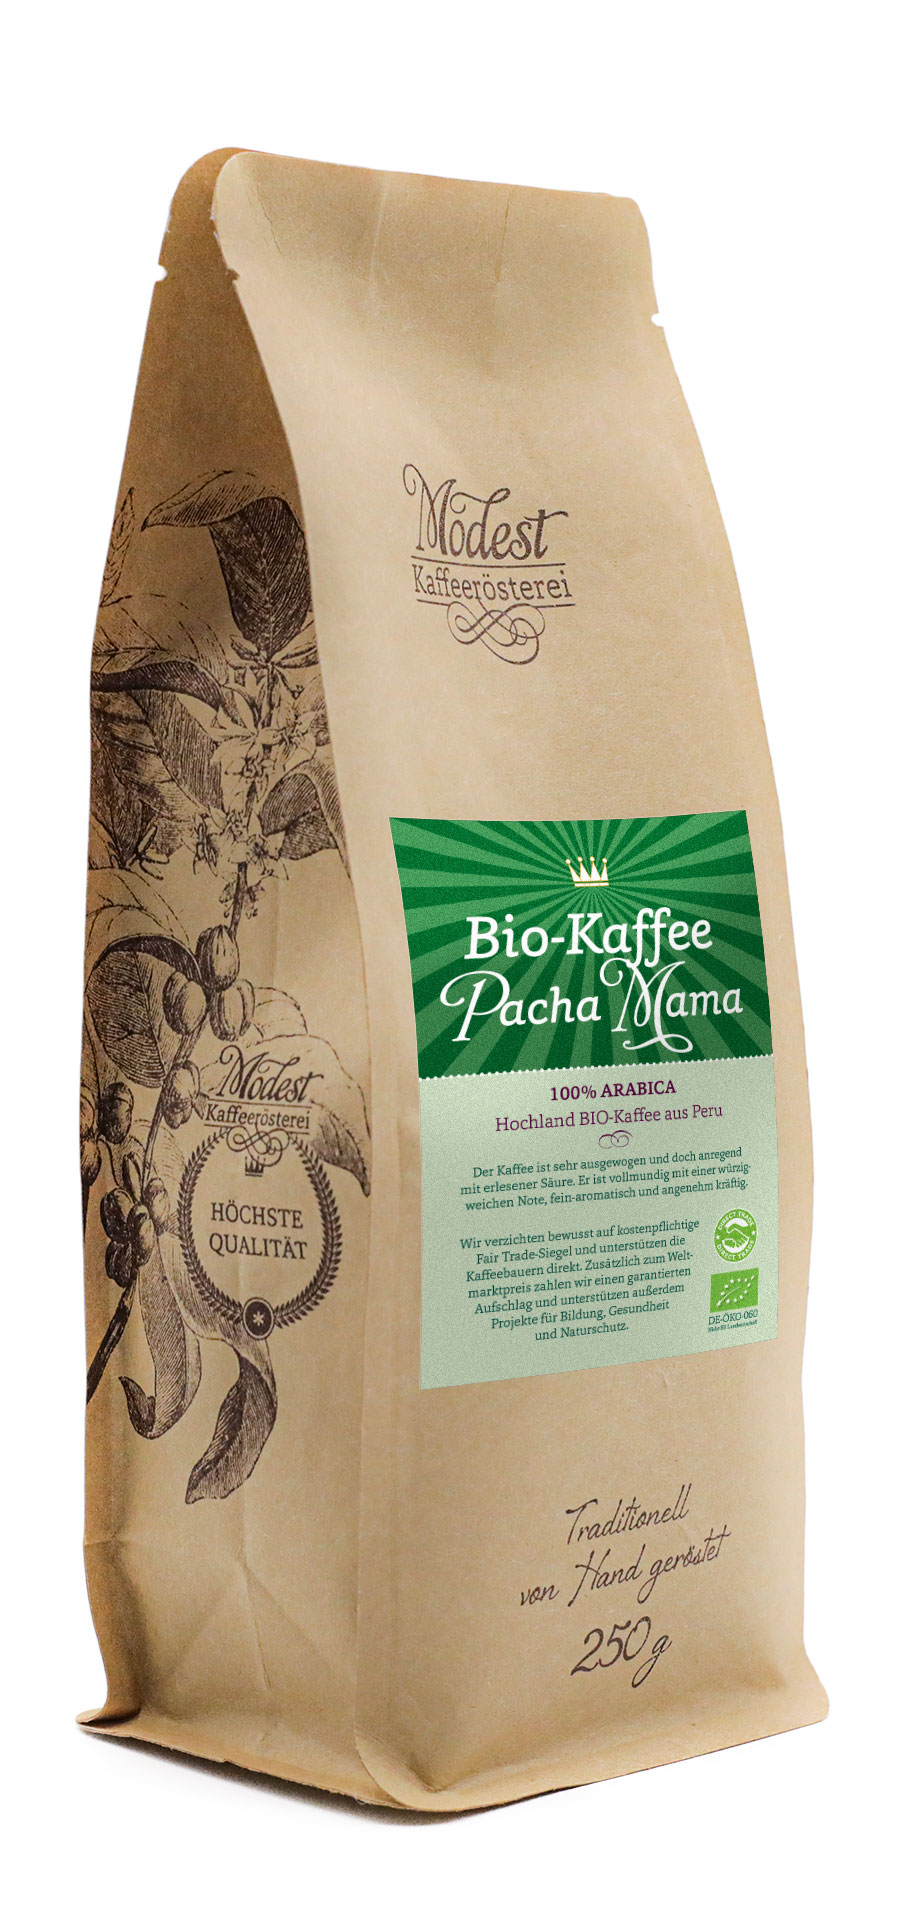 Bio-Kaffee Pacha Mama 100 % Arabica